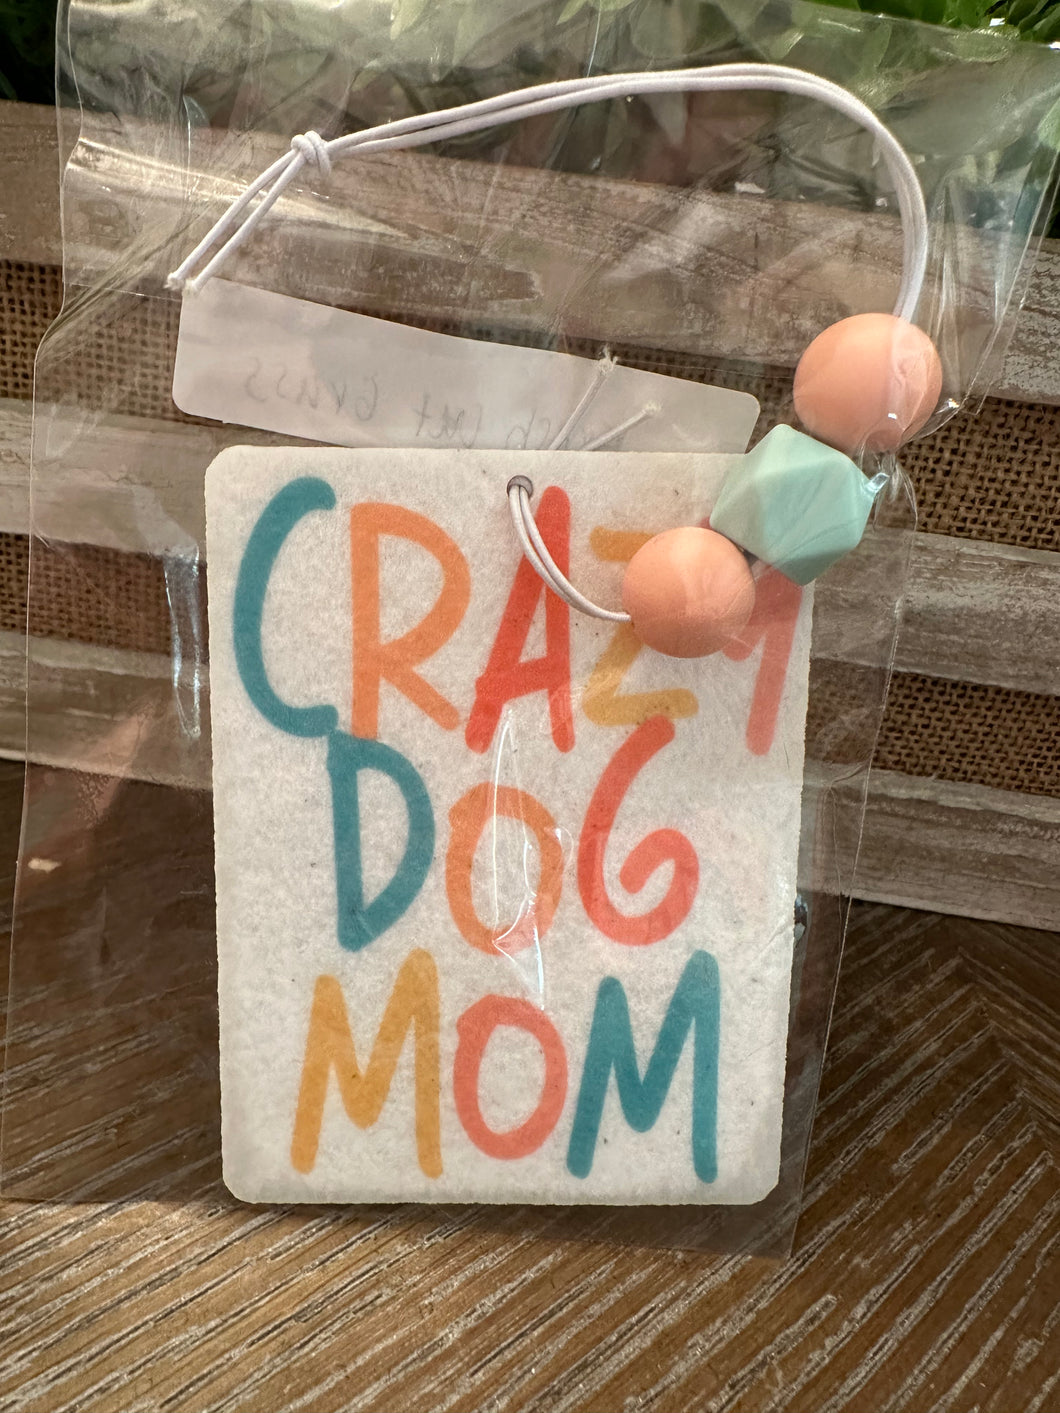 Crazy Dog Mom Air Freshener